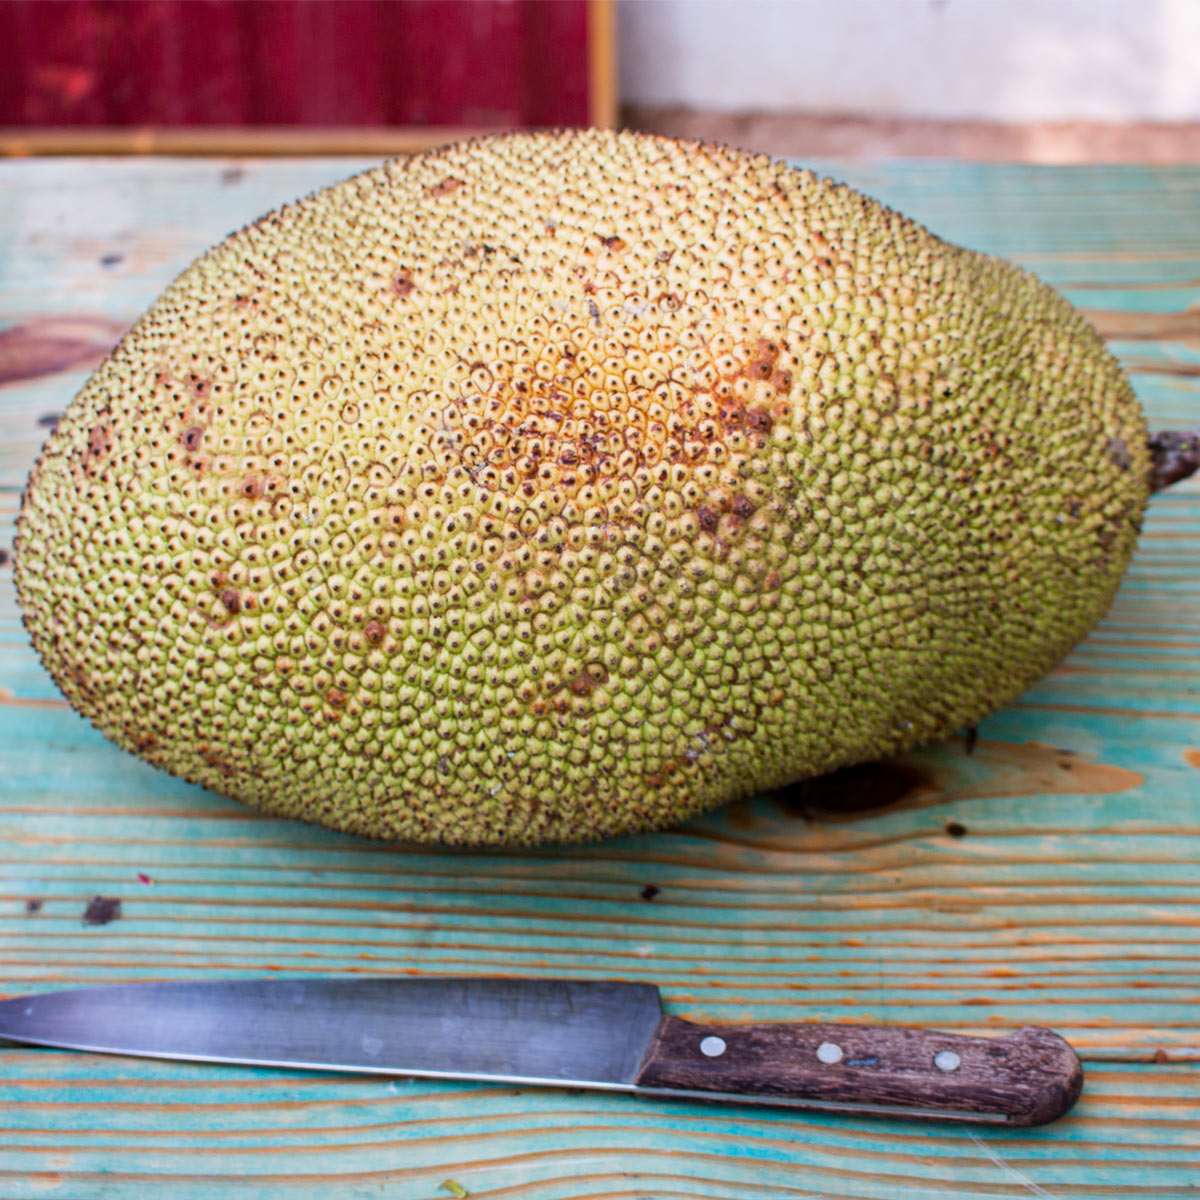 A ripe whole jackfruit